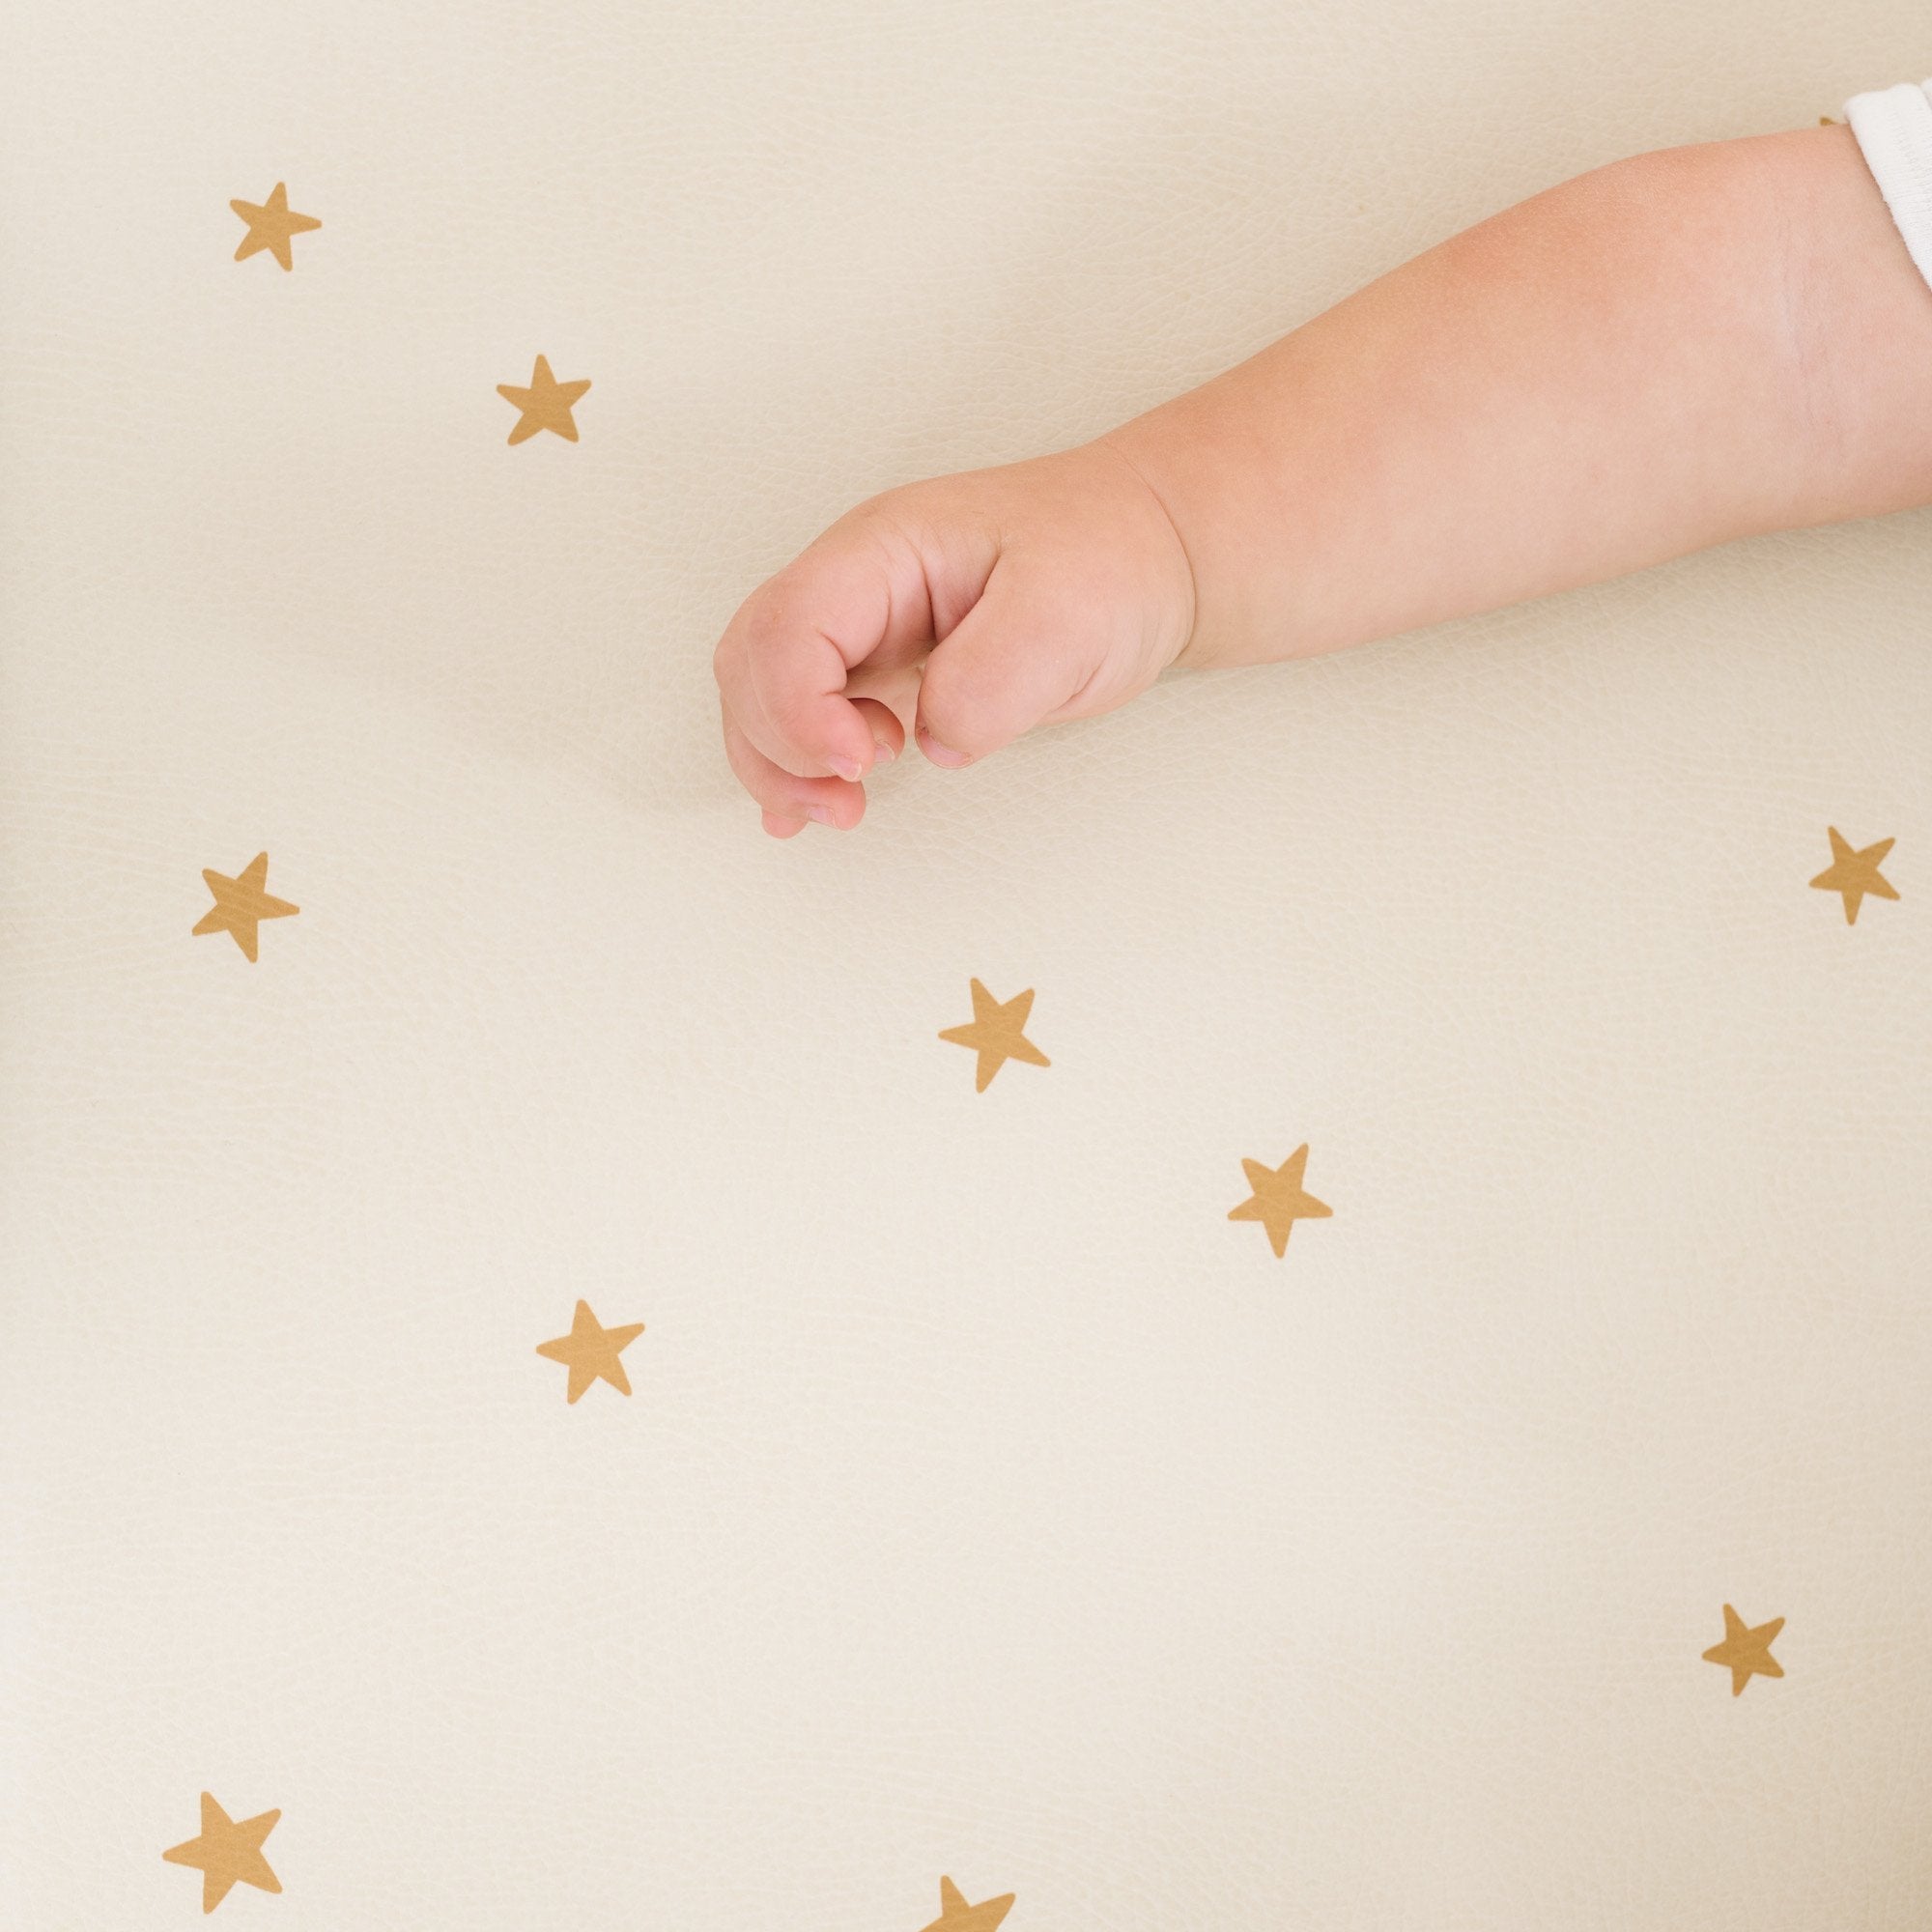 Stars (on sale)@baby hand on stars padded micro+